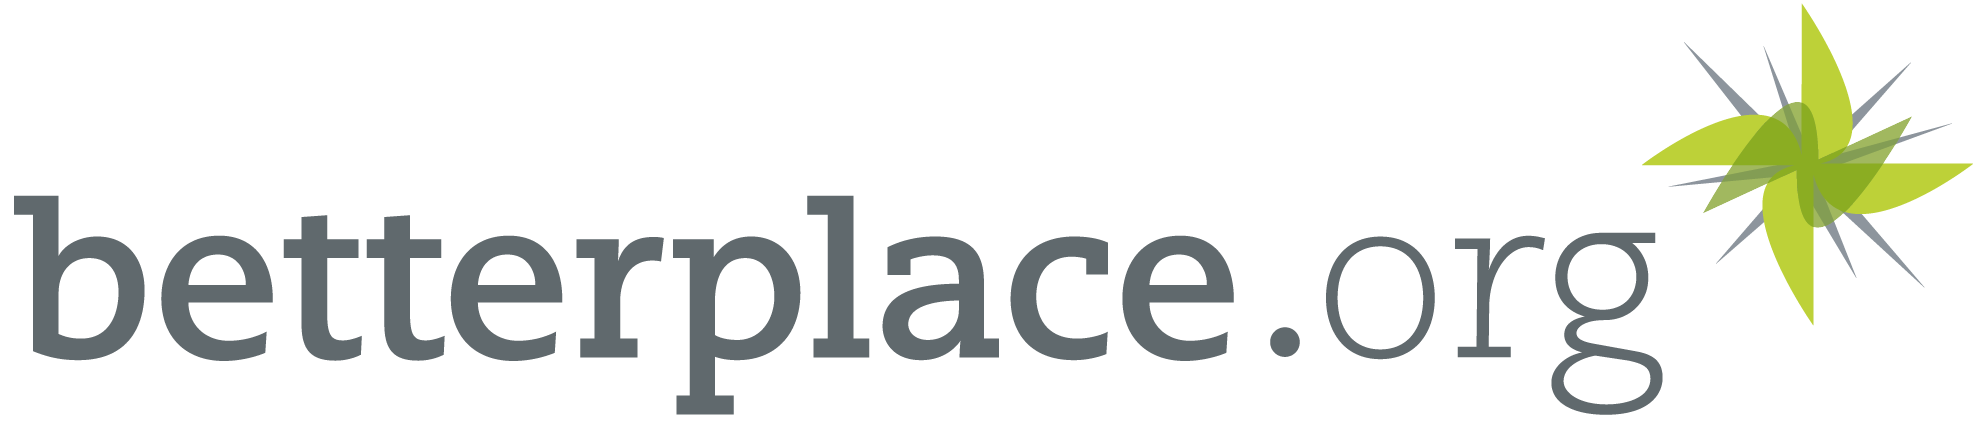 logo-betterplace